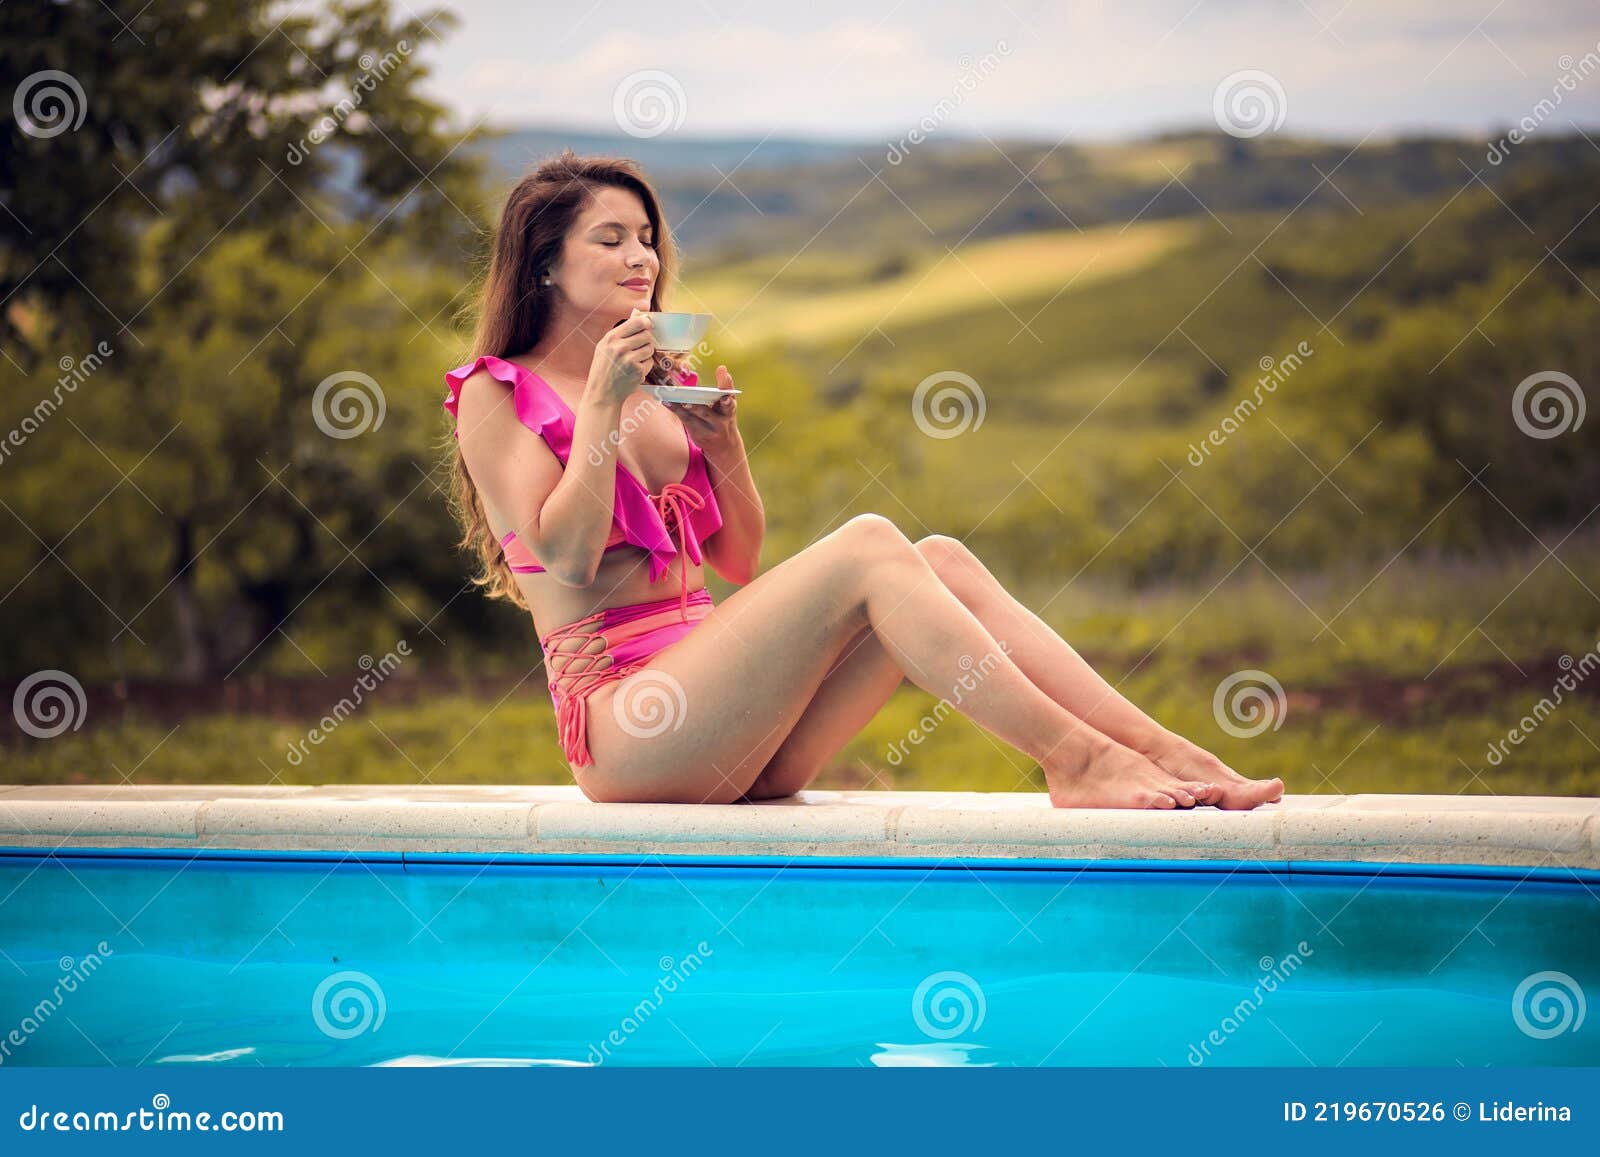 woman-sitting-pool-holding-cup-coffee-woman-sitting-pool-holding-cup-coffee-summer-219670526.jpg